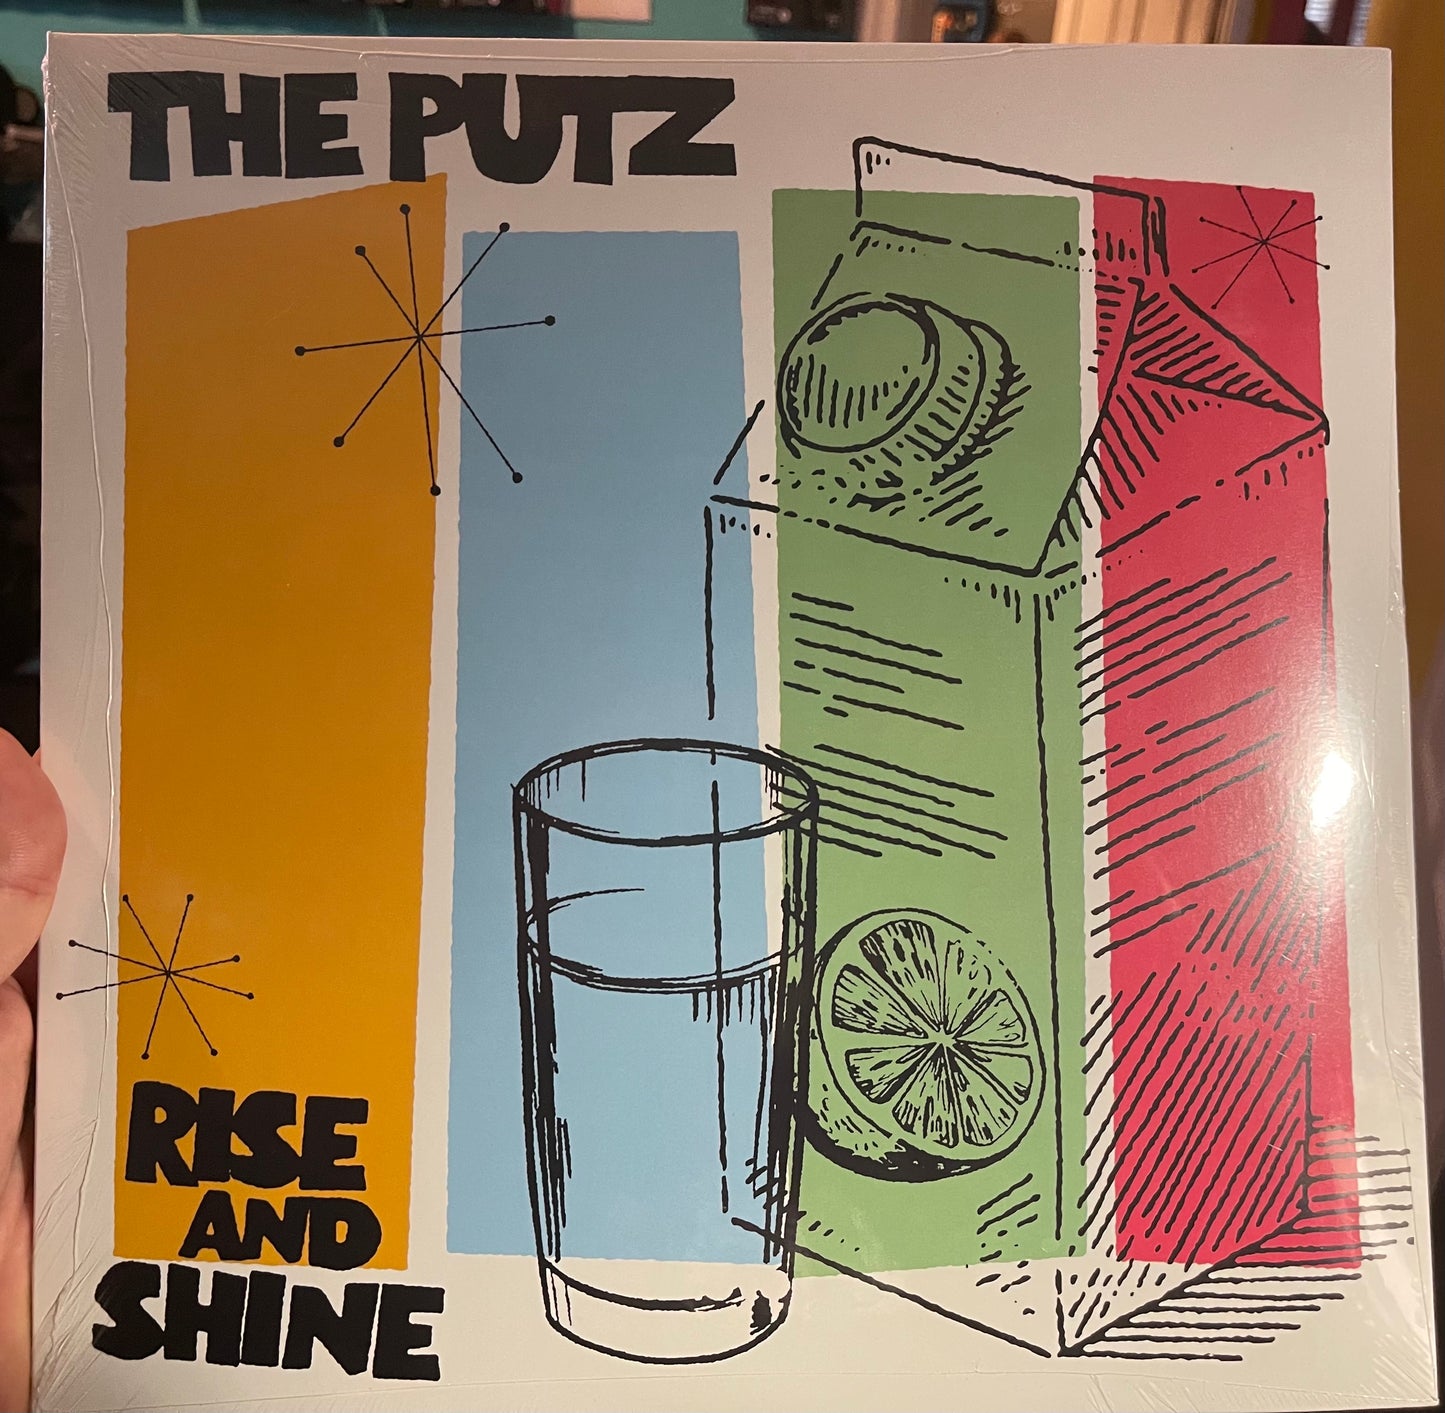 OMRDST-023 The Putz “Rise & Shine” LP